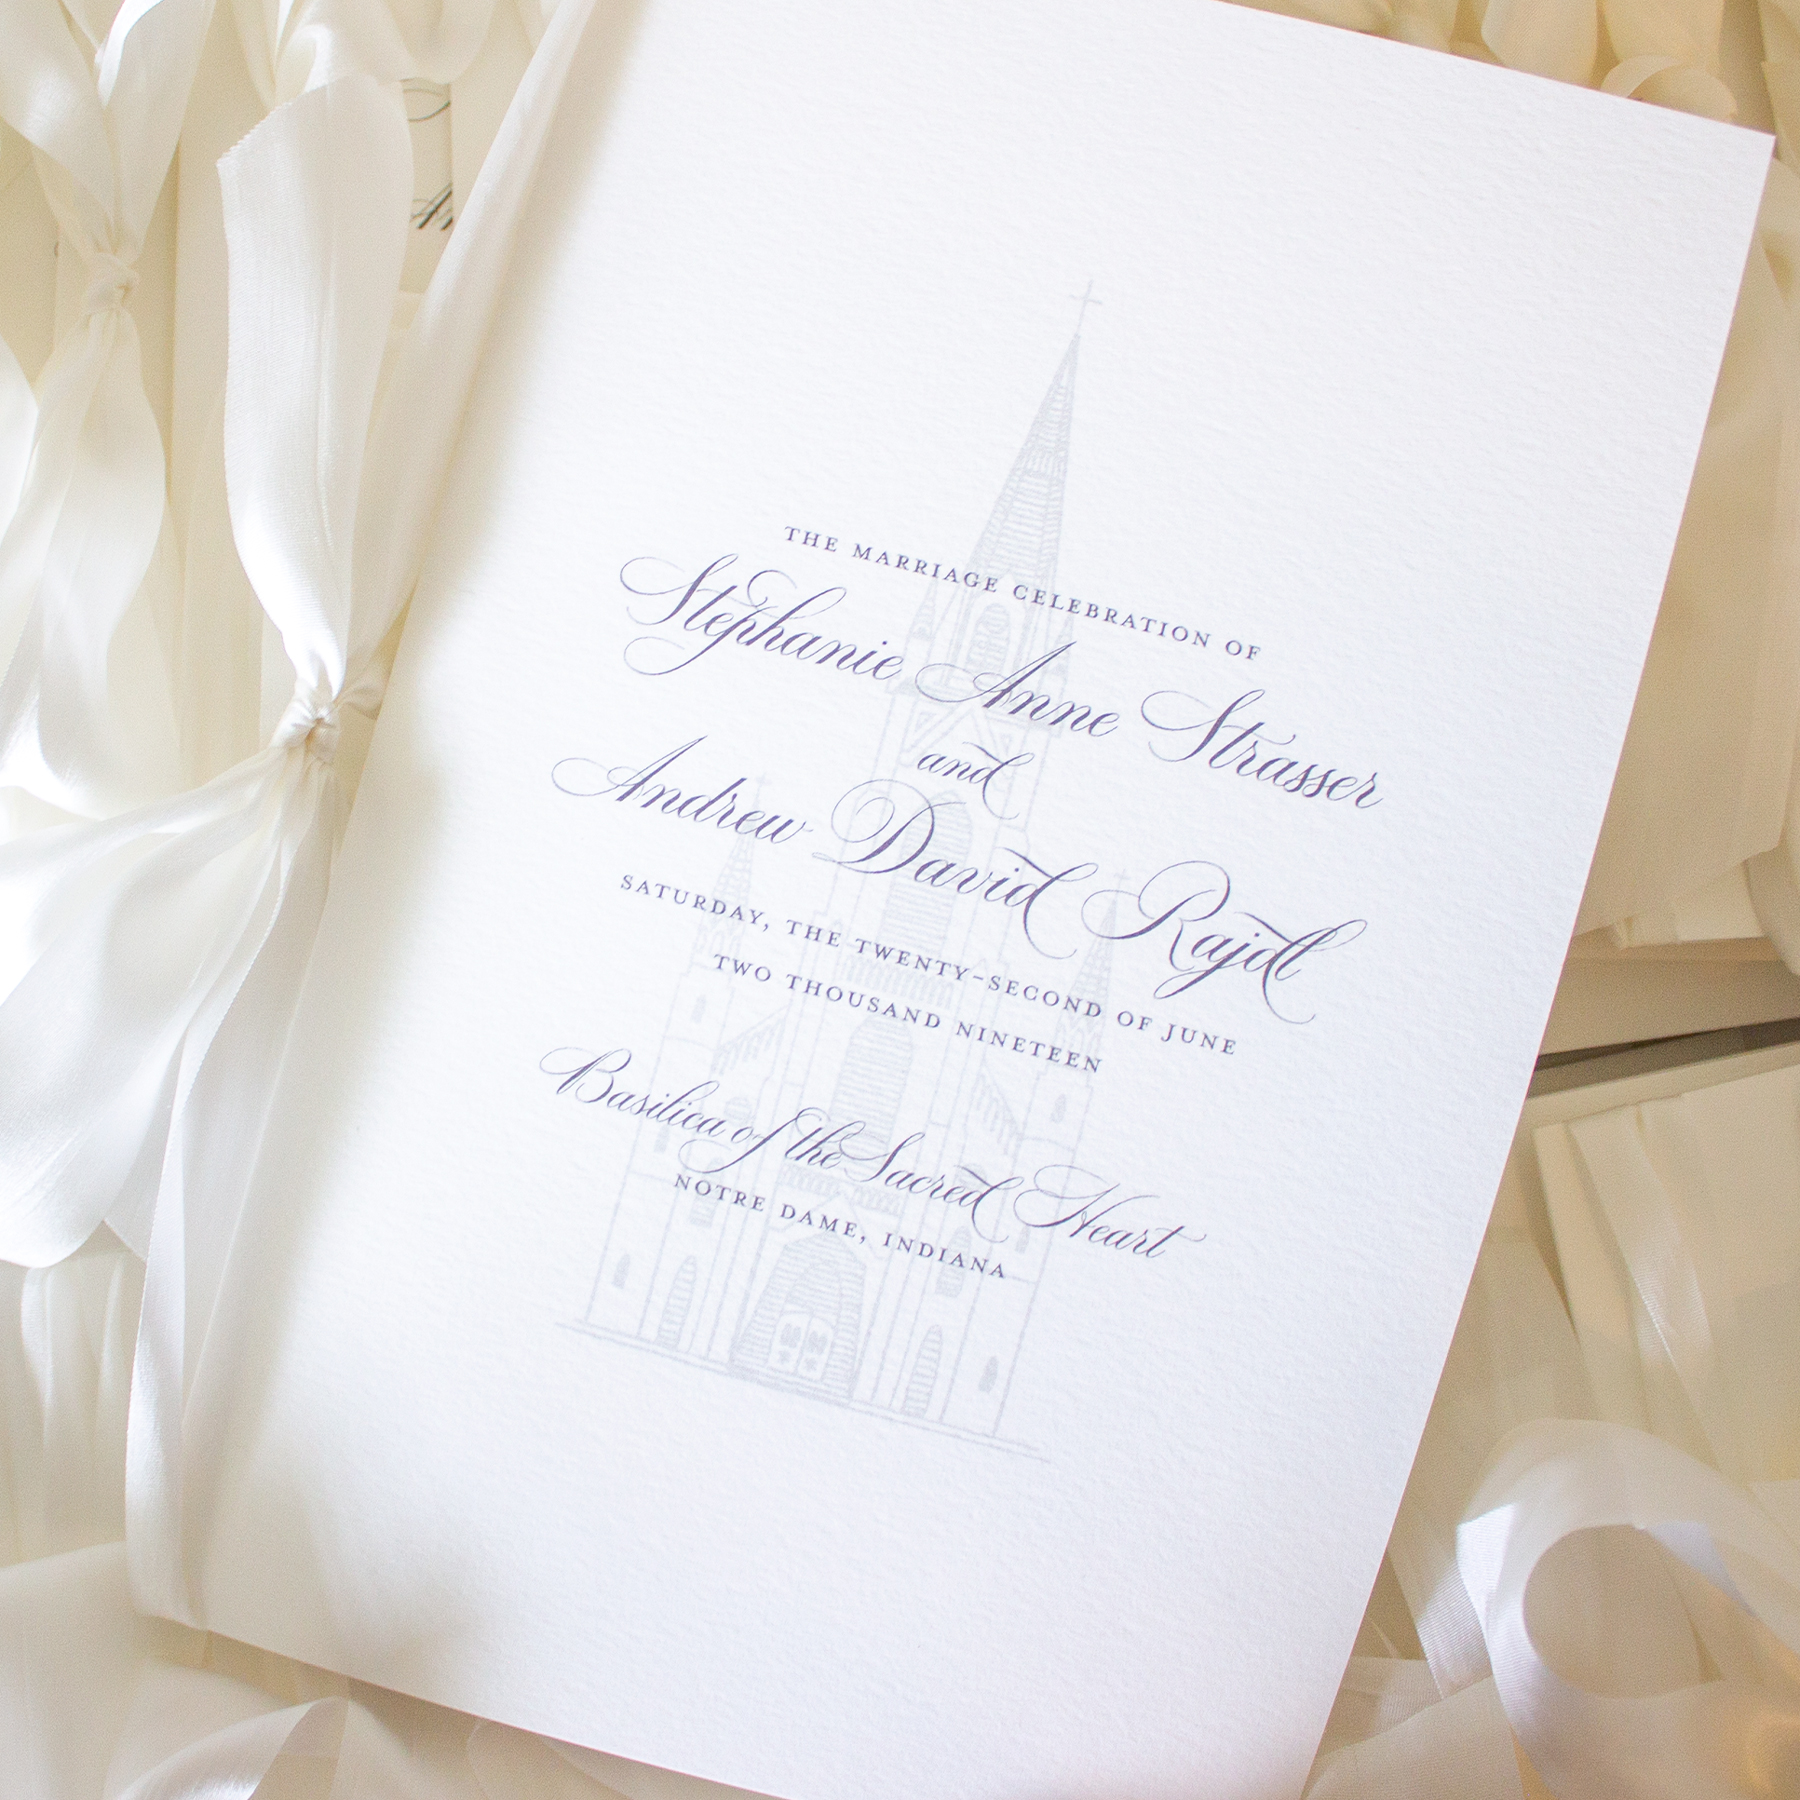 Notre Dame Wedding ceremony program